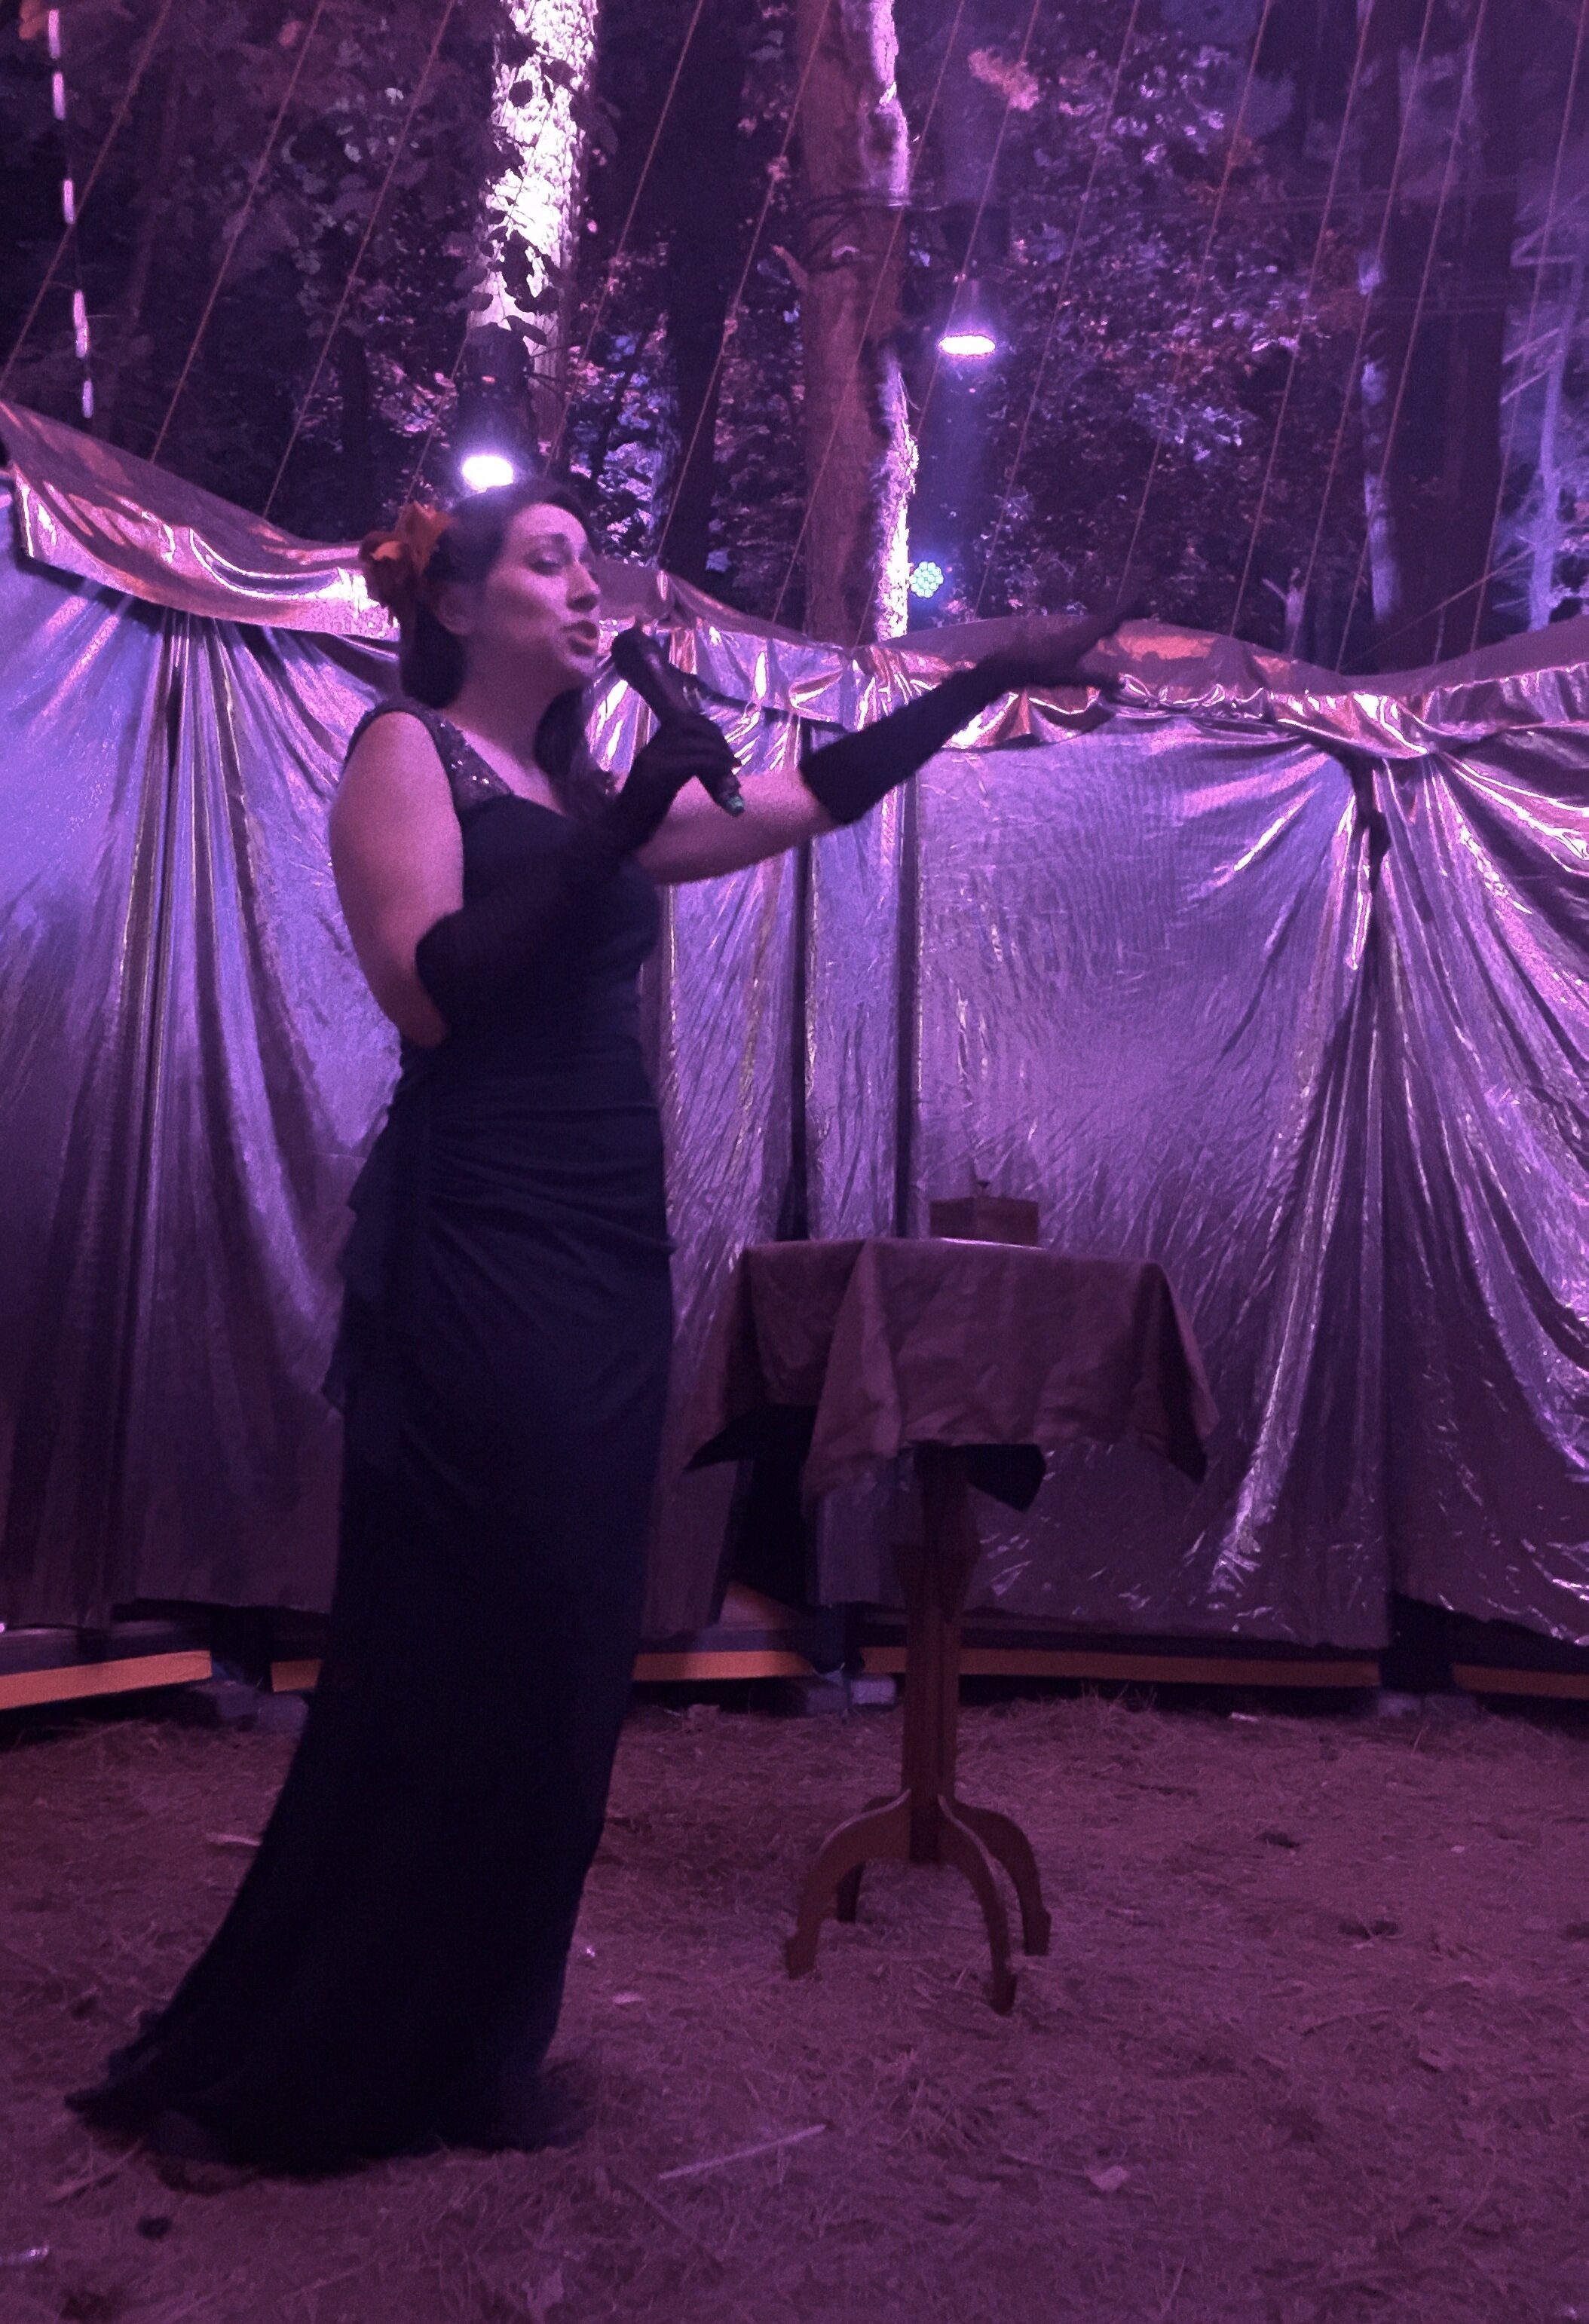  Serenading in David Korins' "The Grove" installation at Bonnaroo 